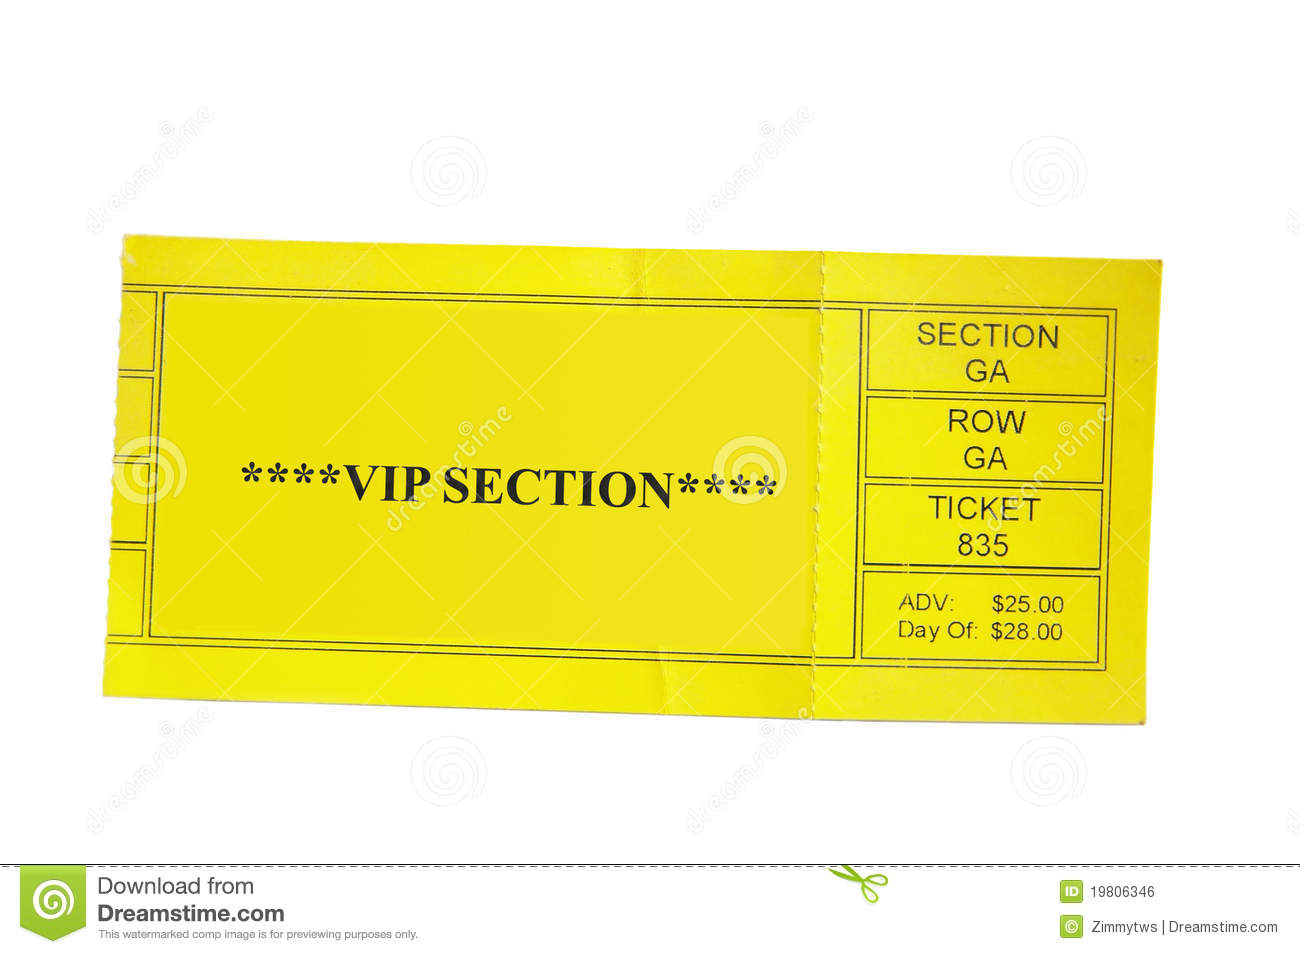 Vip Ticket Royalty Free Stock Image   Image  19806346